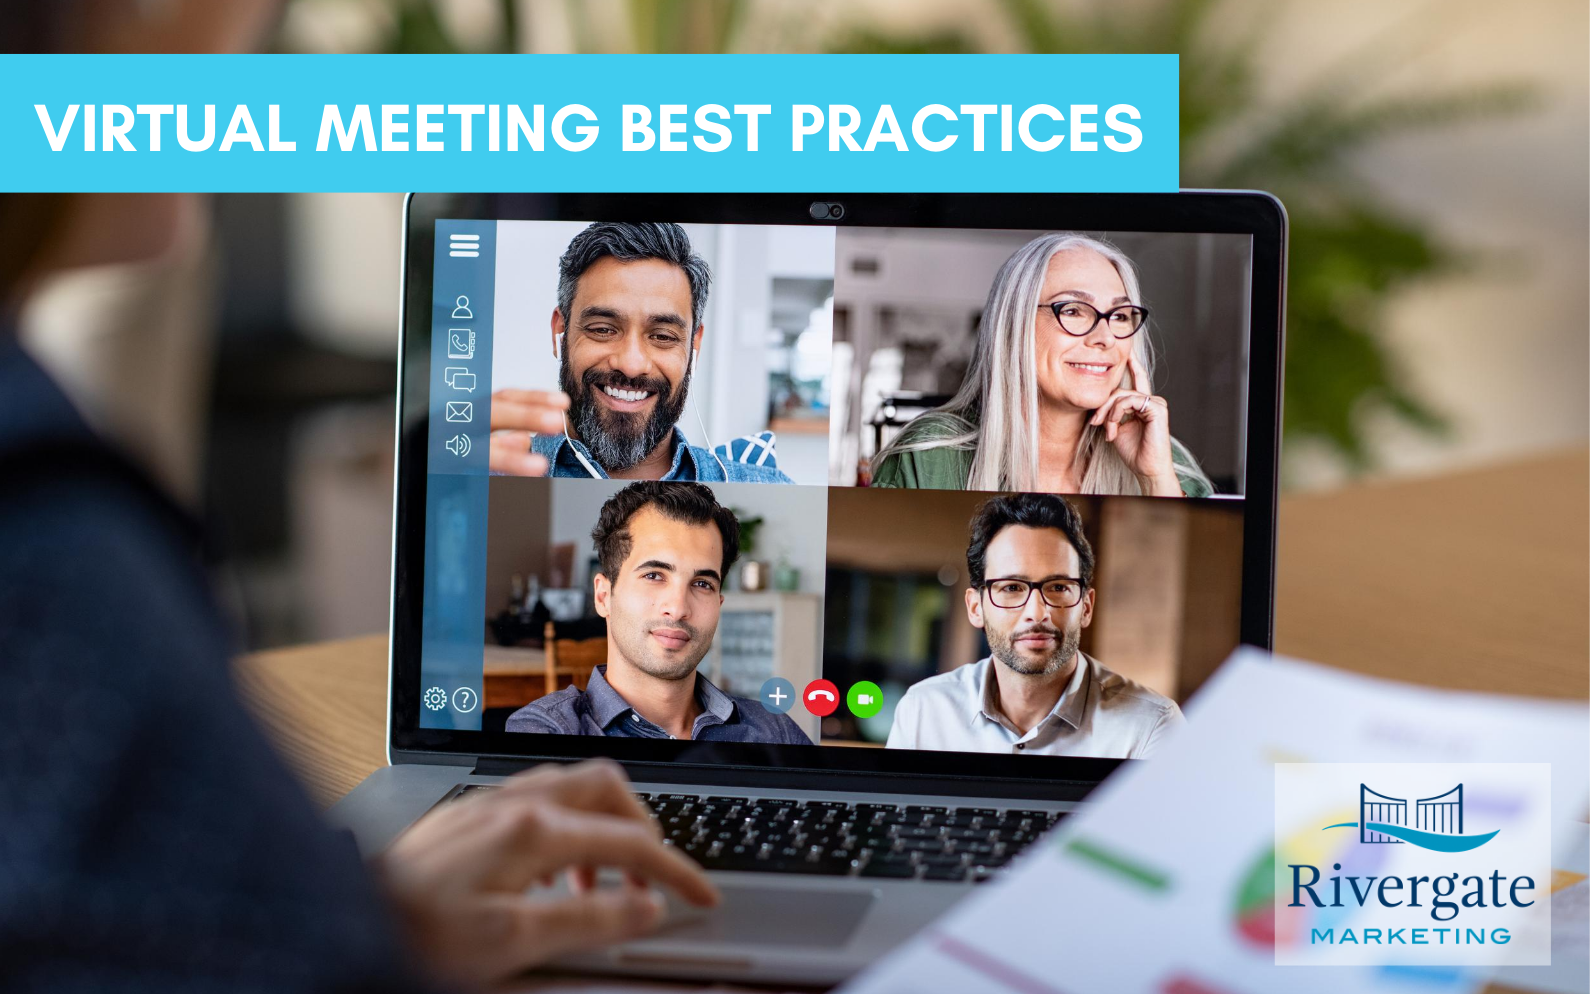 Rivergate Marketing 12 Tips for Virtual Meetings